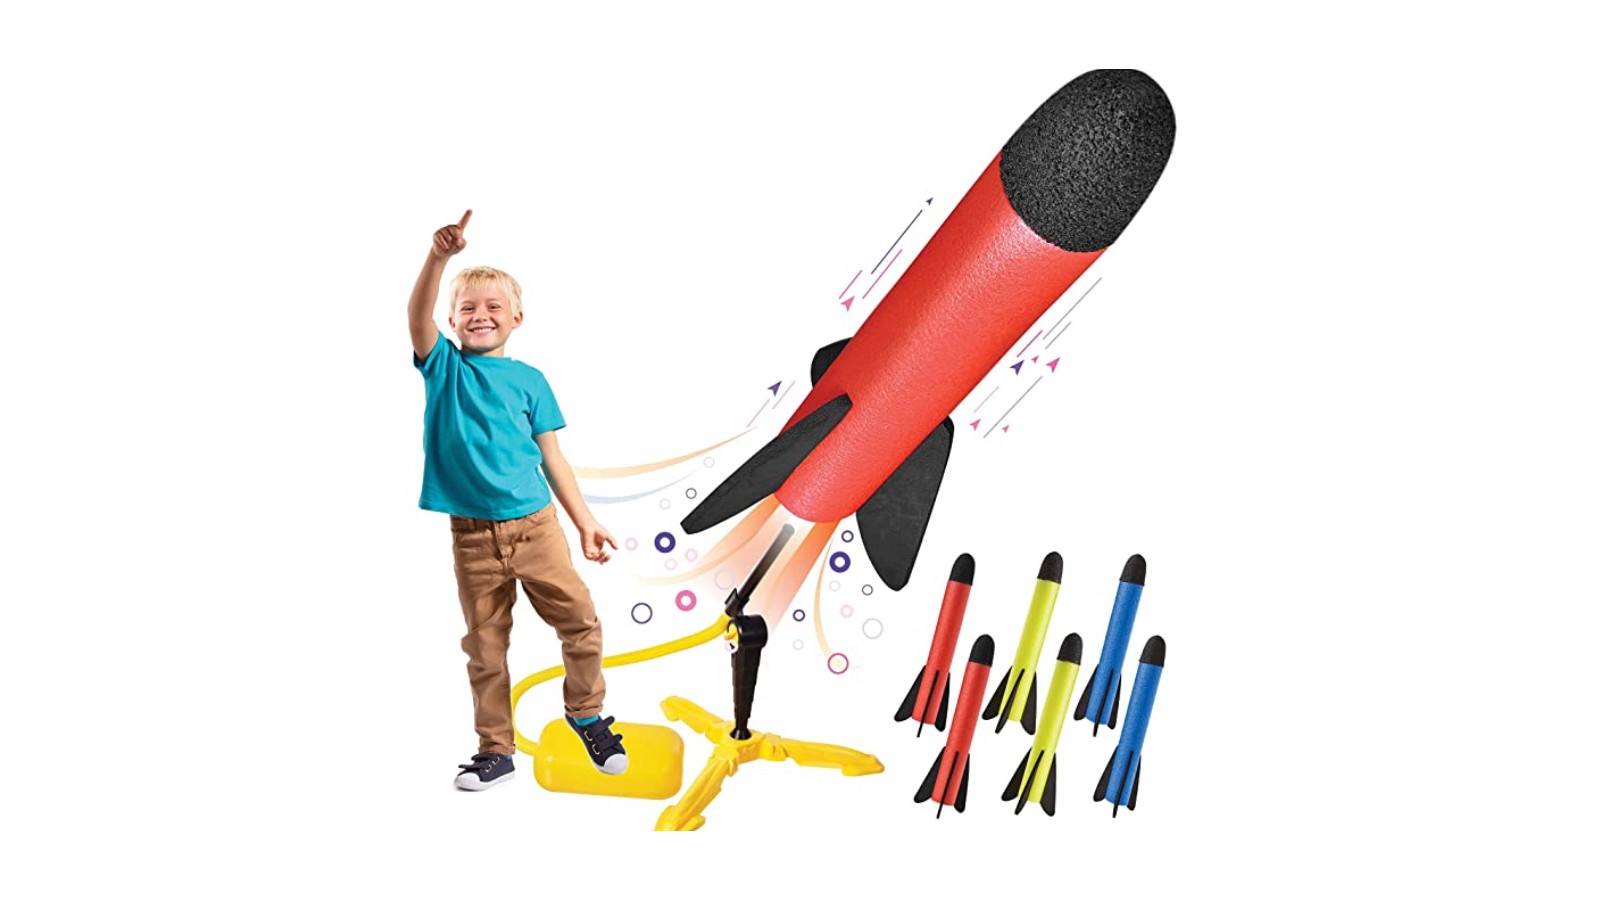 Toy rocket launcher for kids_Motoworx